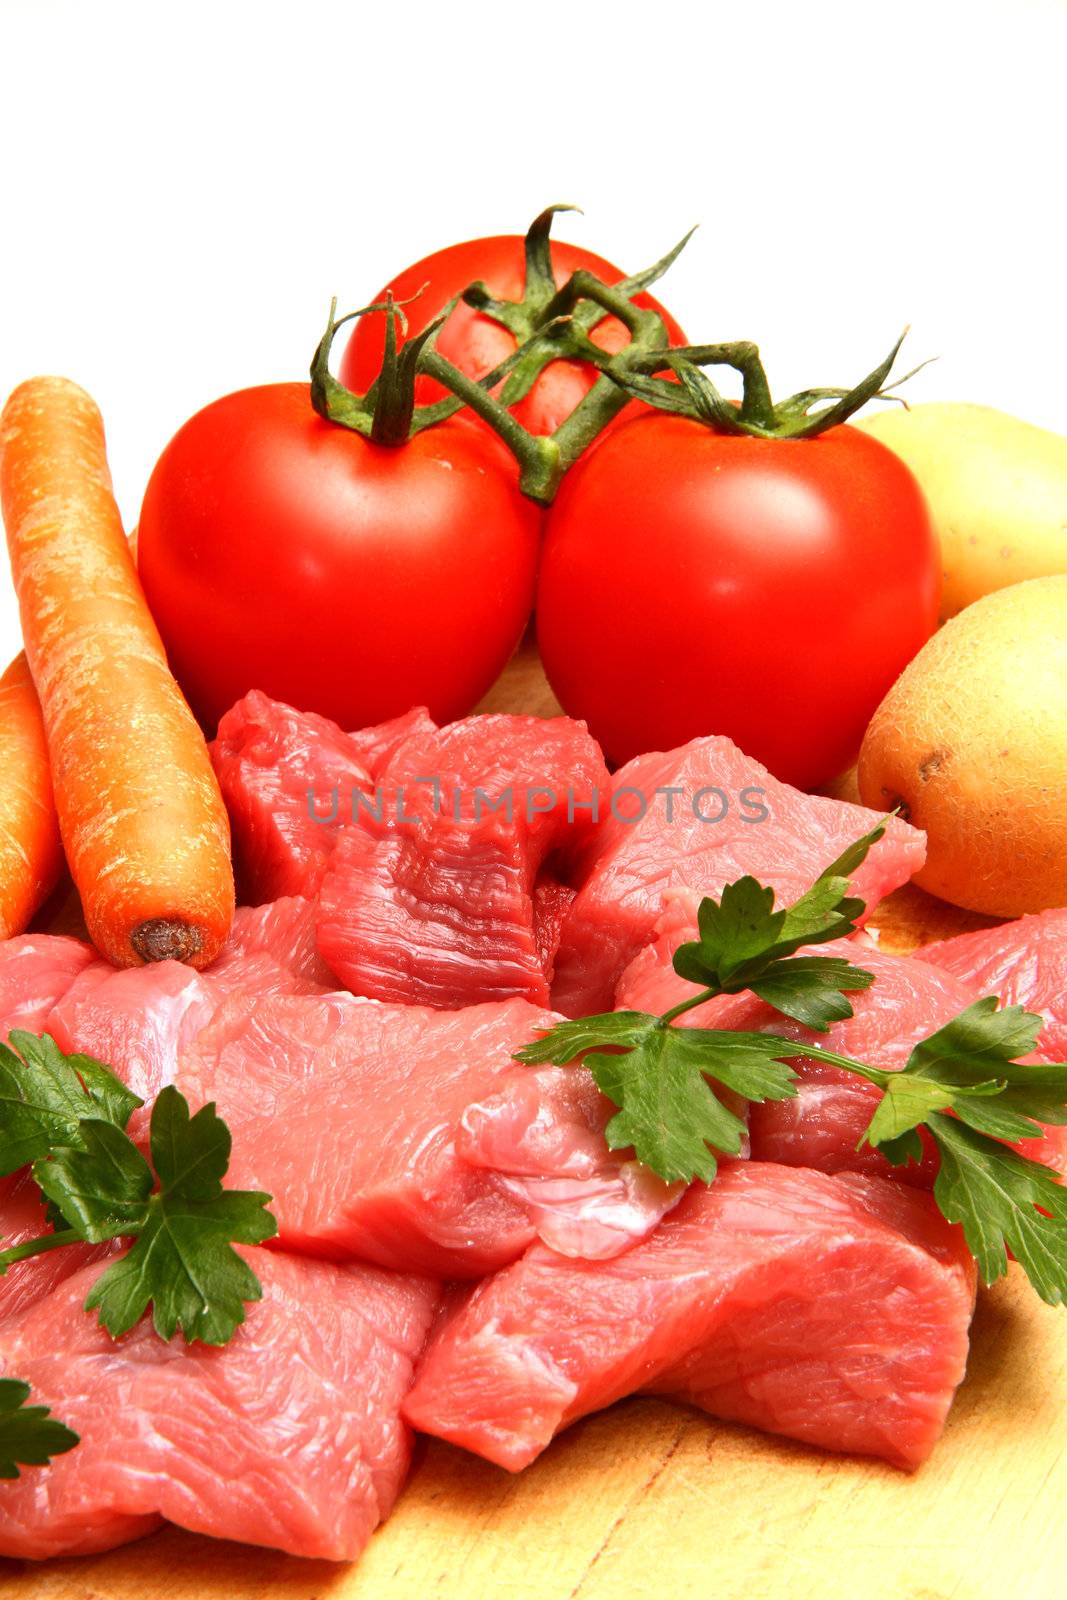 Raw fresh meat by lsantilli